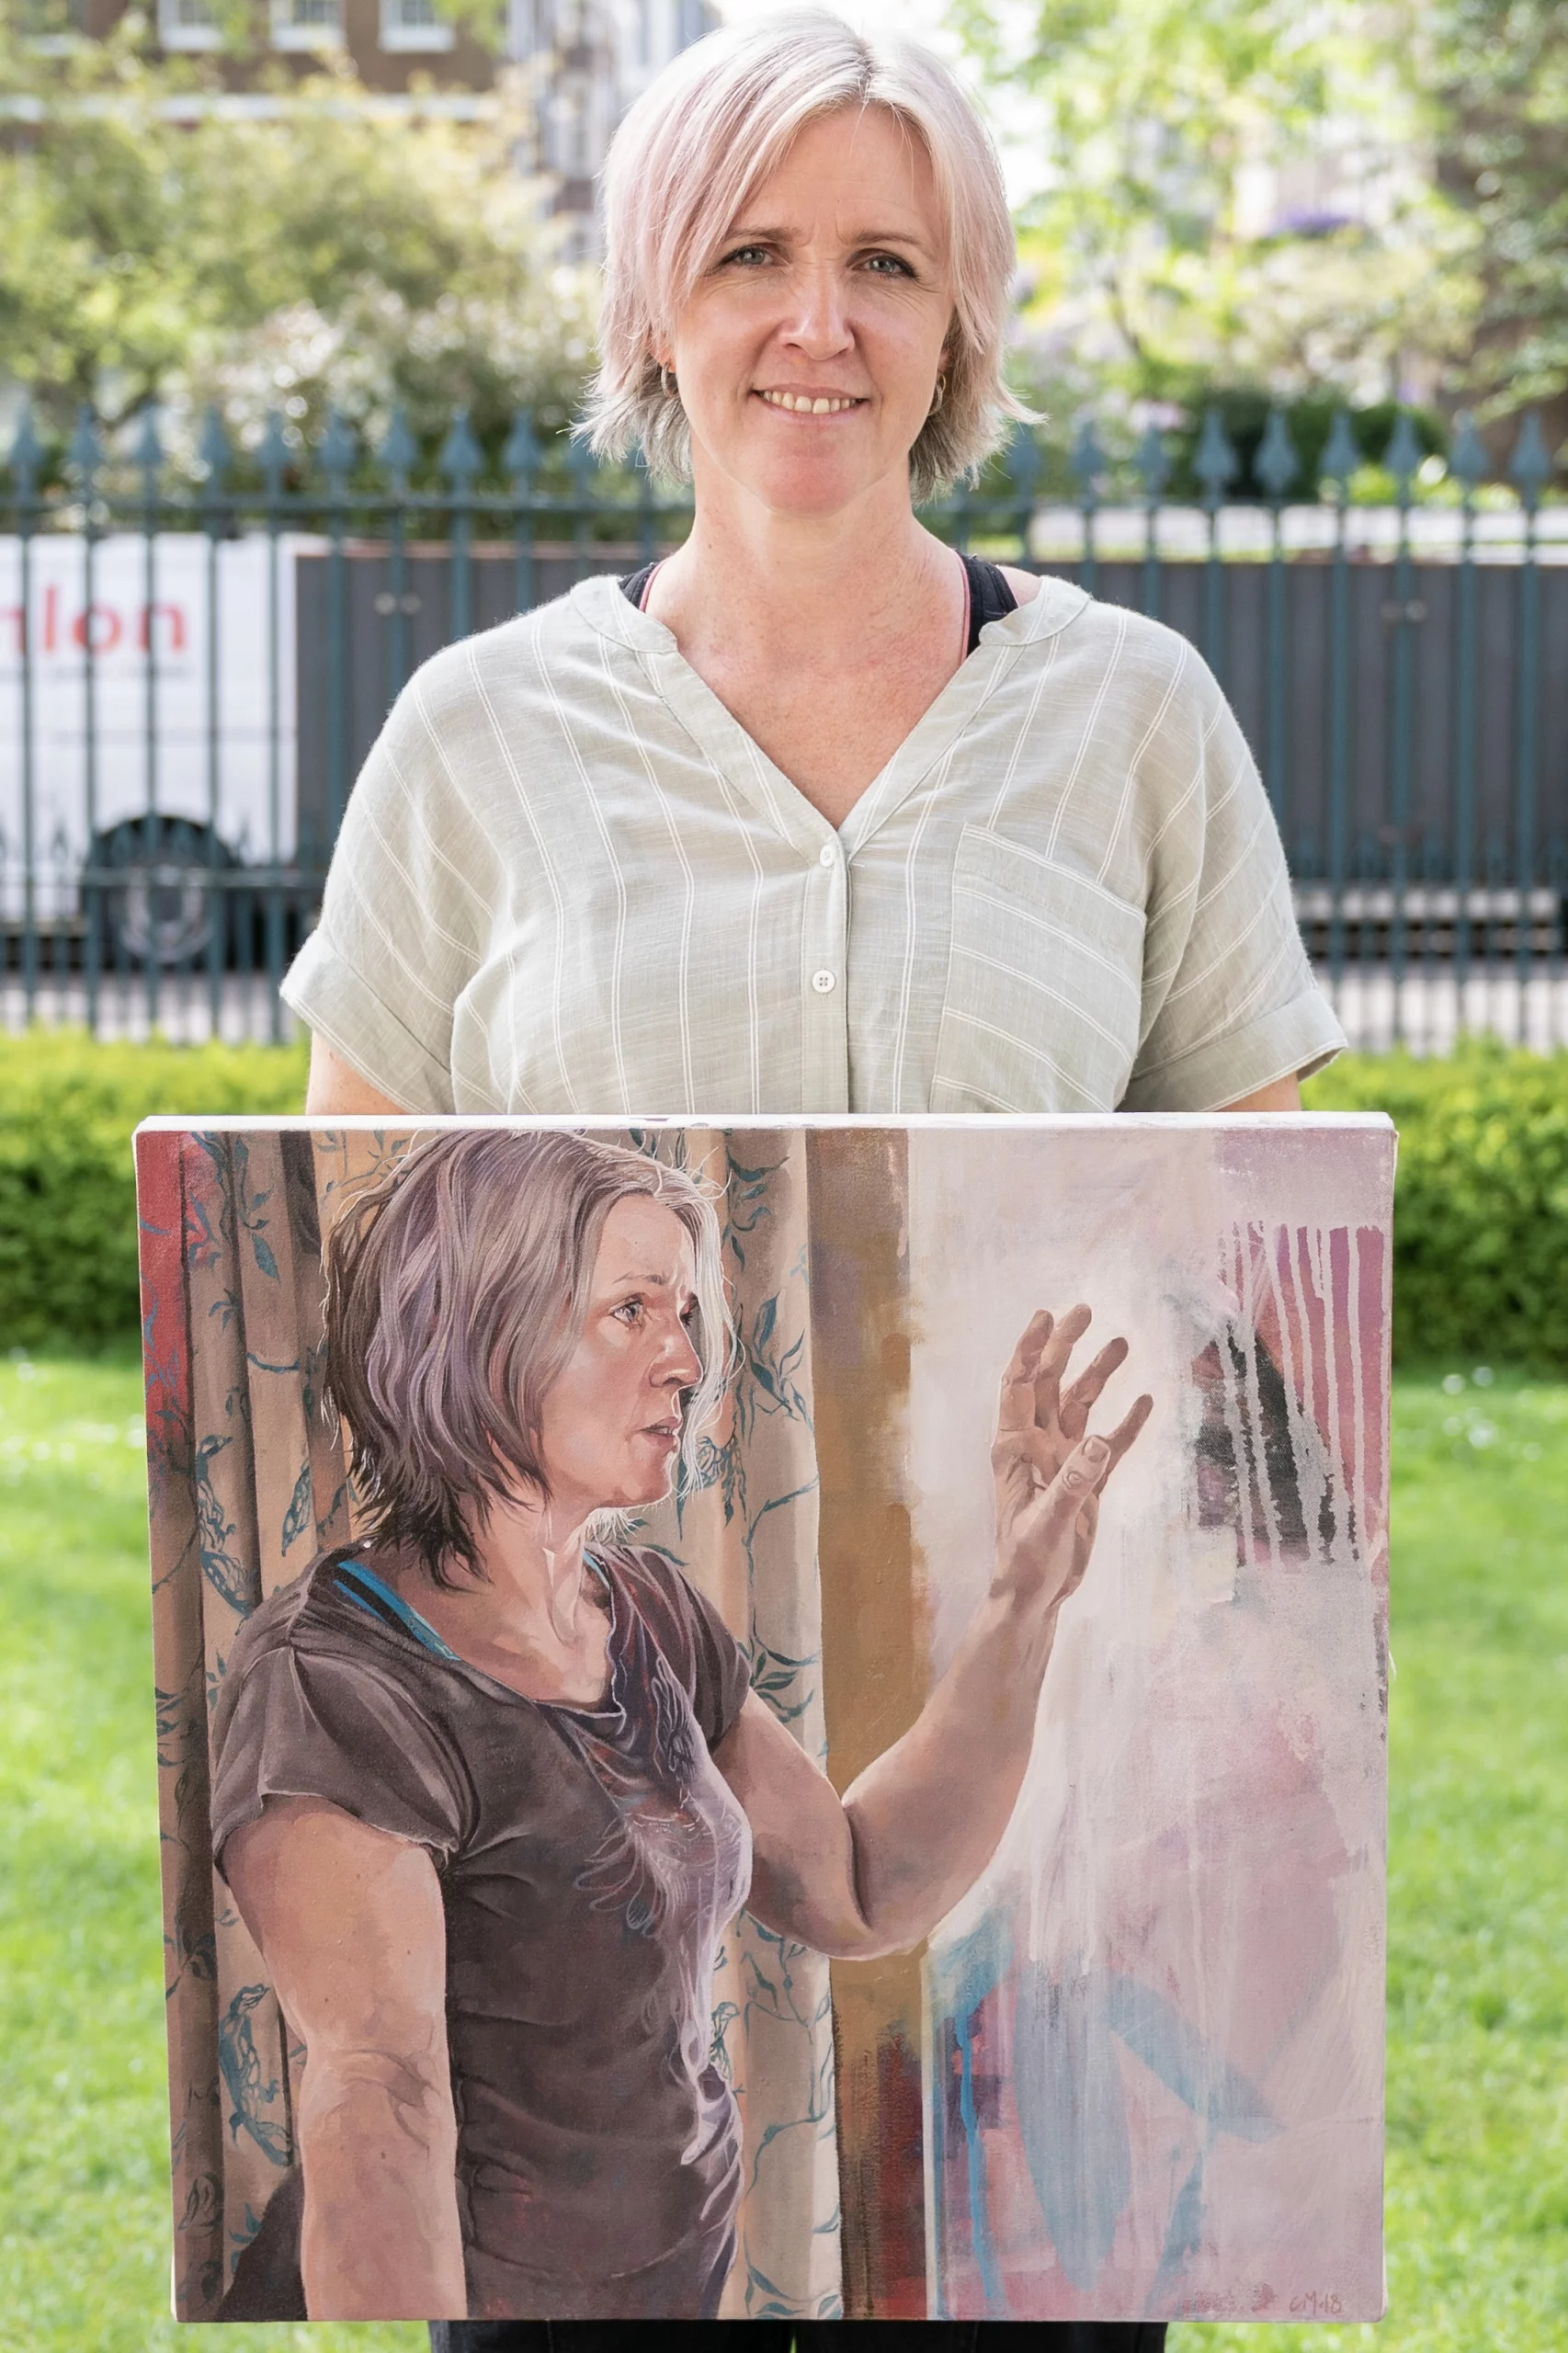 Catherine-MacDiarmid Portrait artist of the year series 2019